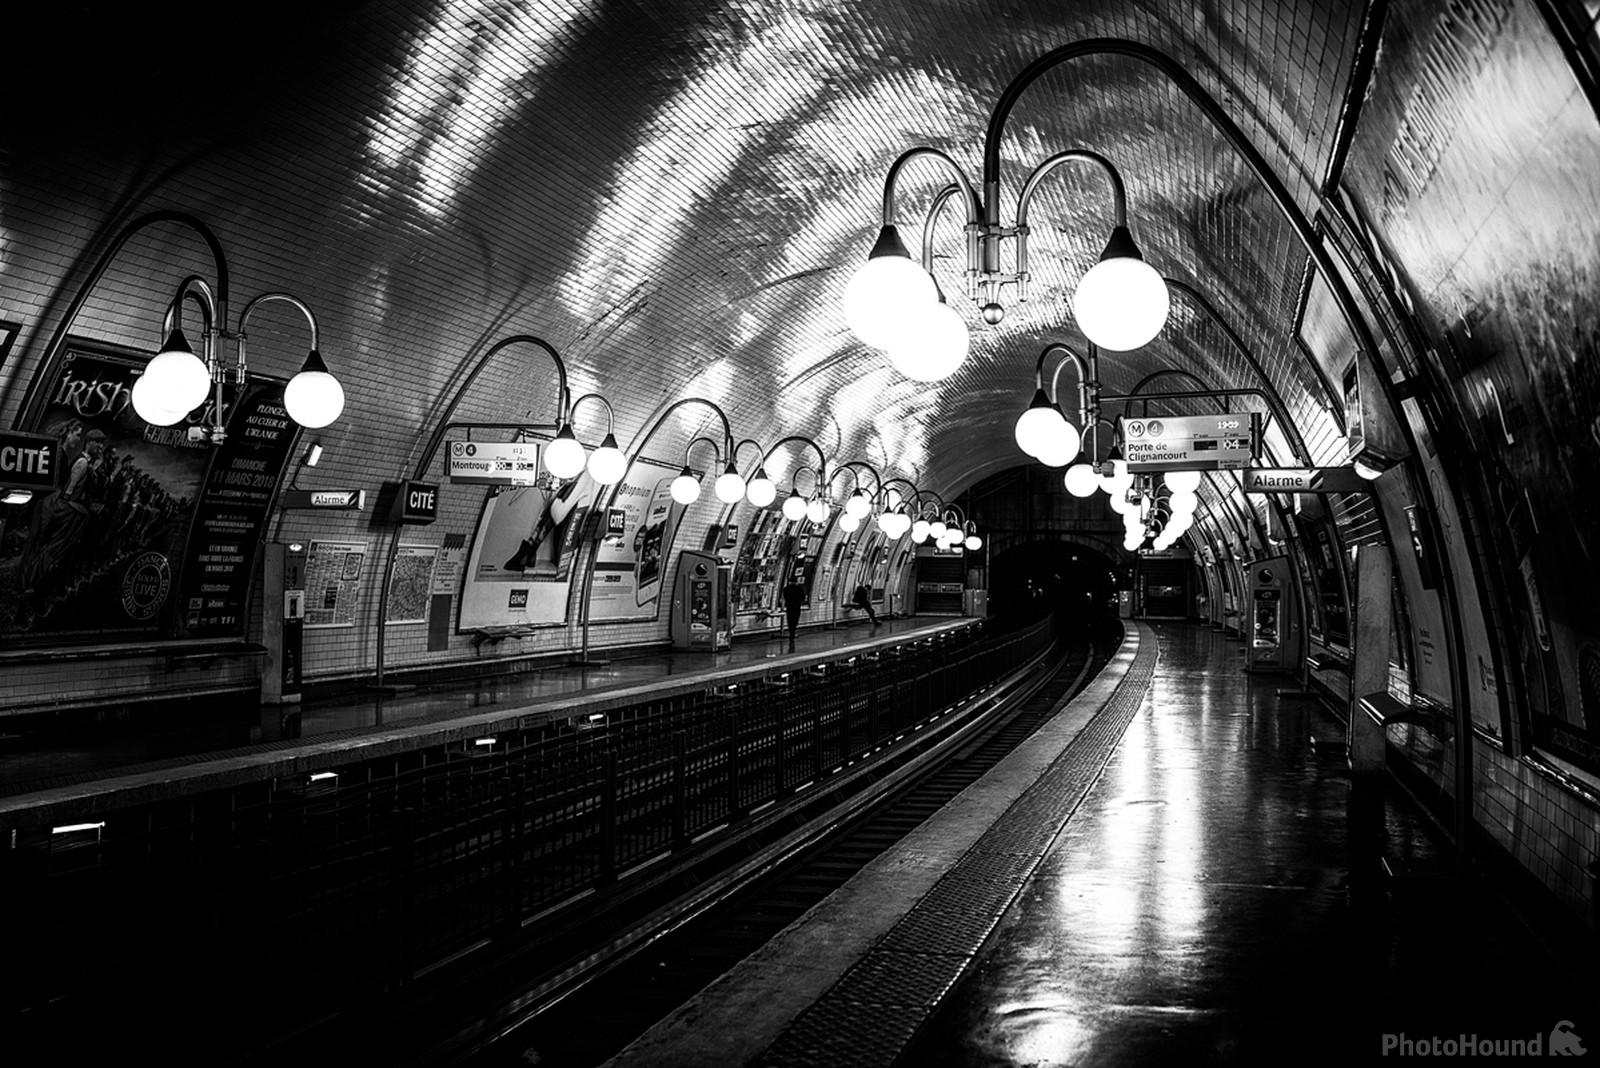 Image of Cité Metro station by James Billings.